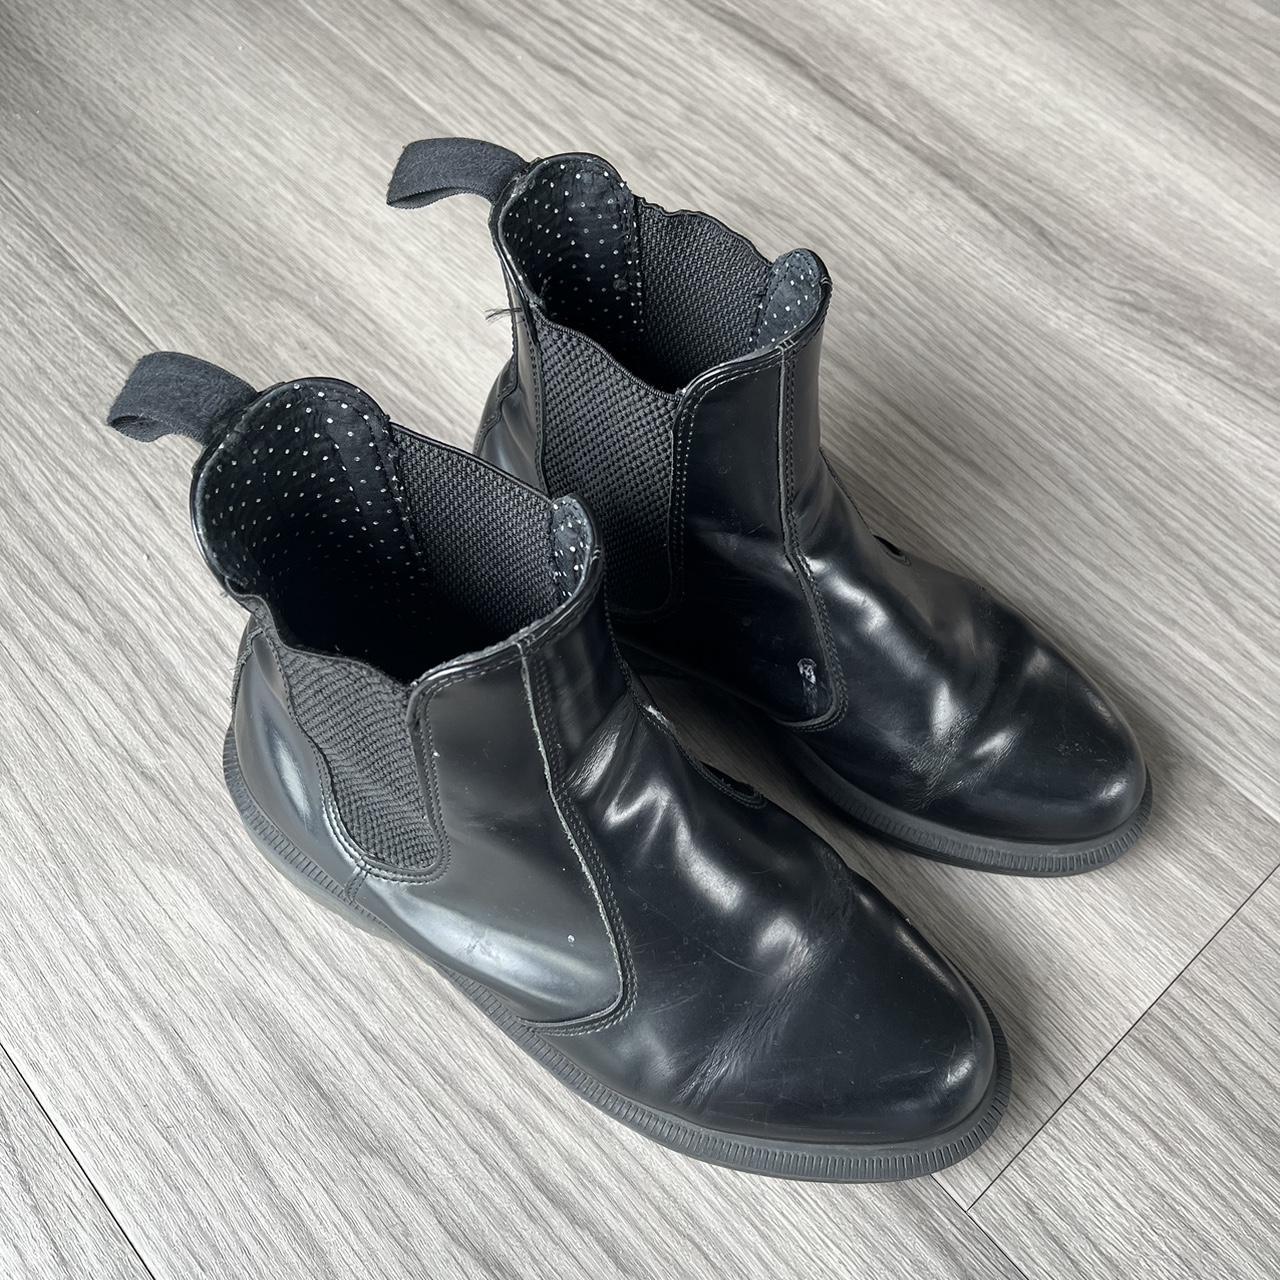 Dr Martens Flora Chelsea Boots Size 5 - true to... - Depop